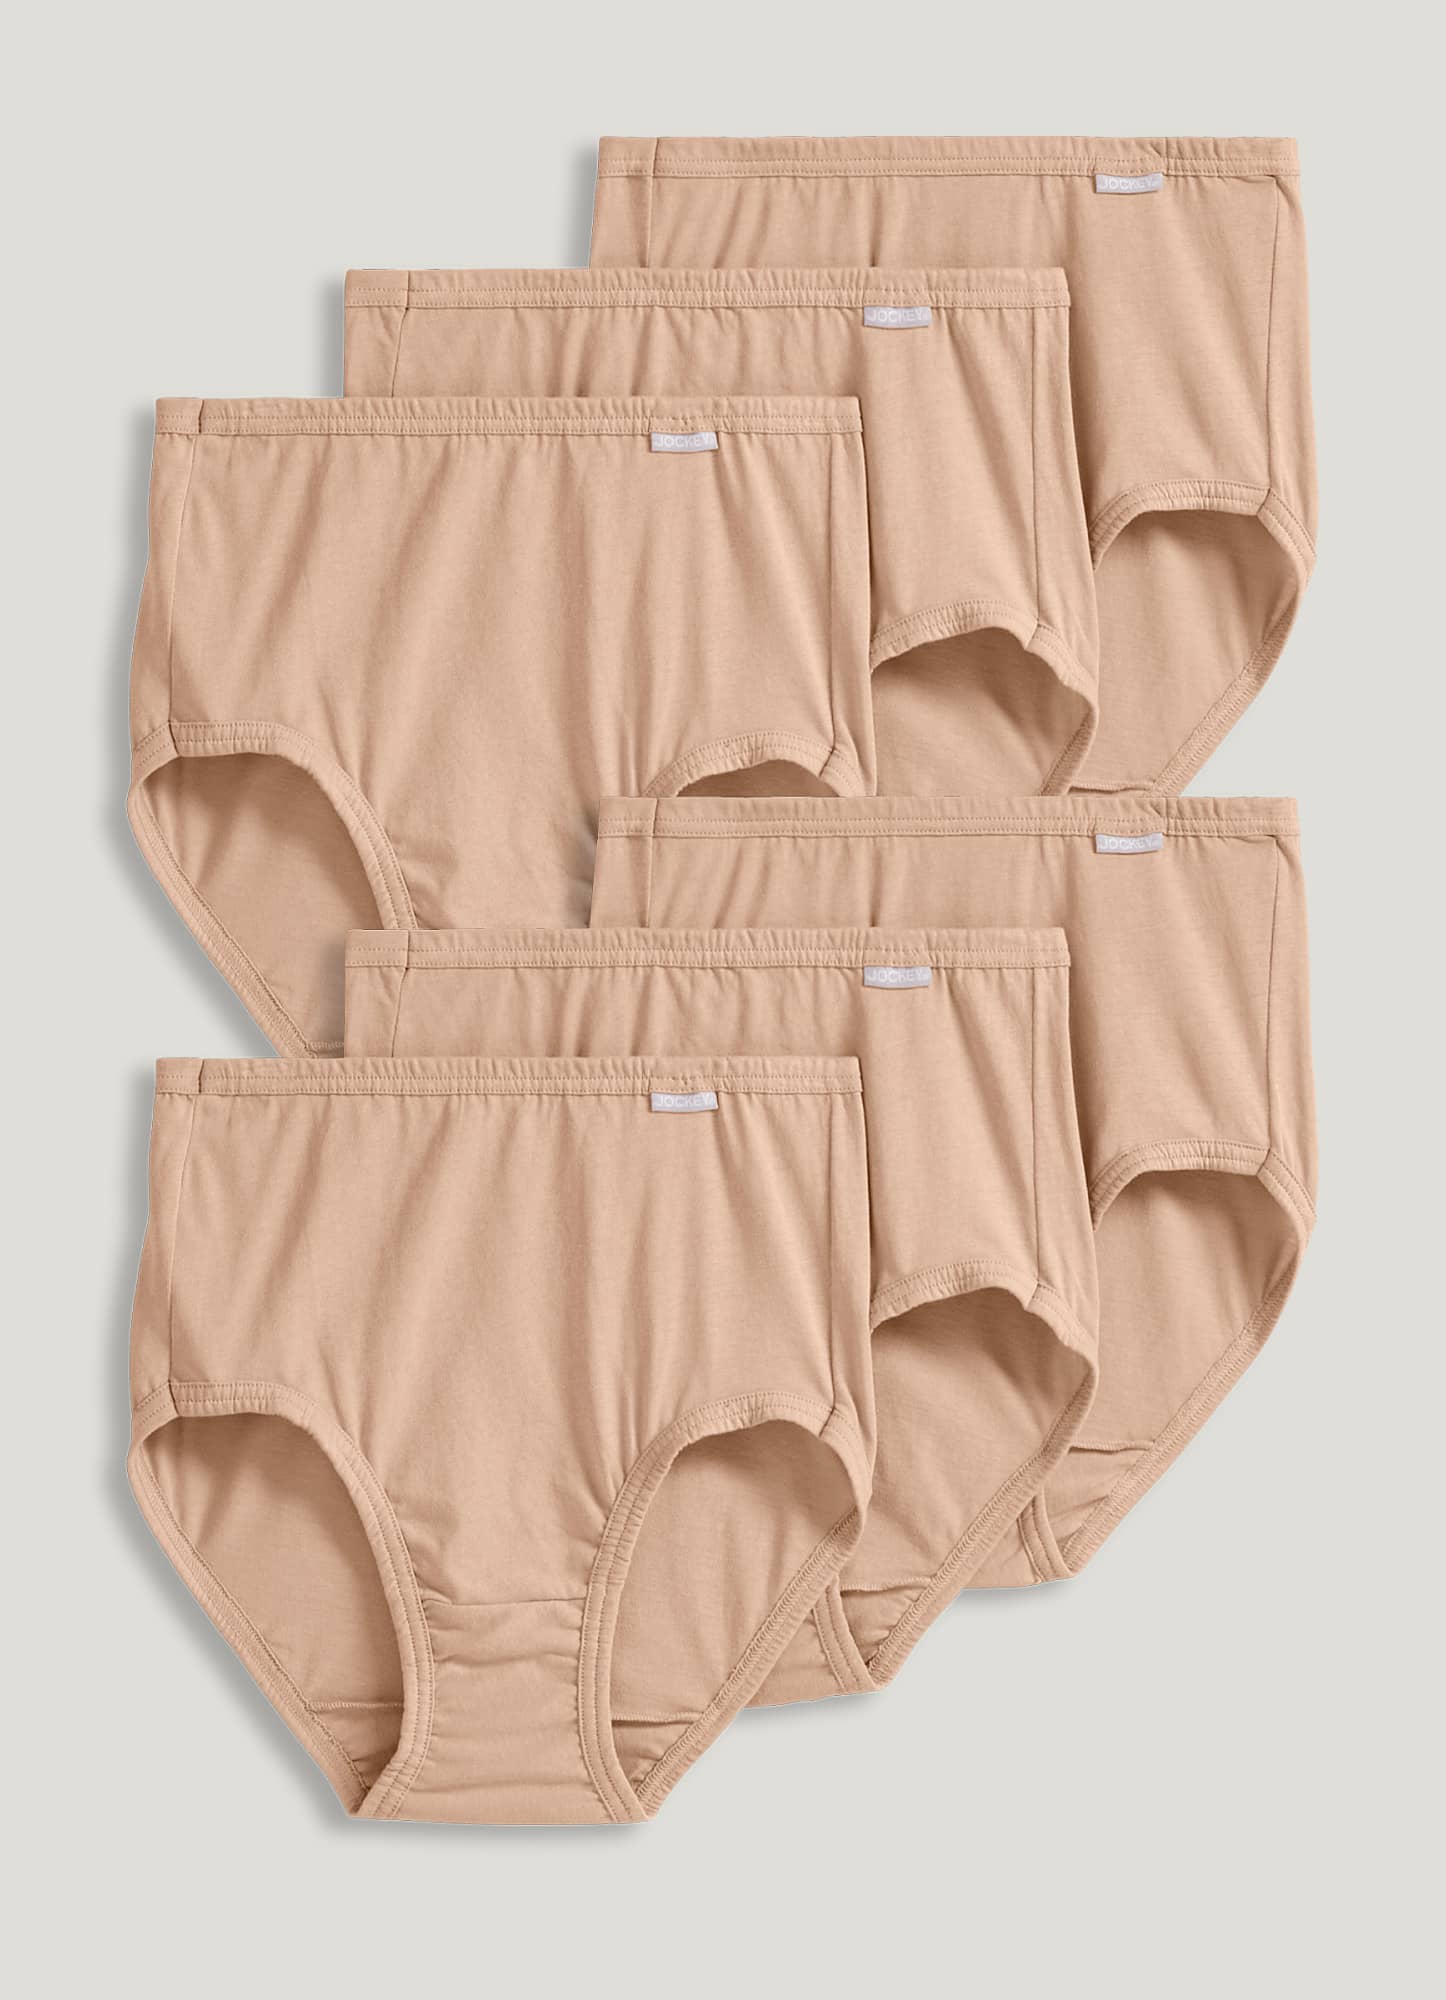 New 3 Pk Jockey Elance Supersoft Micromodal Brief Underwear Panties Size 5  2073